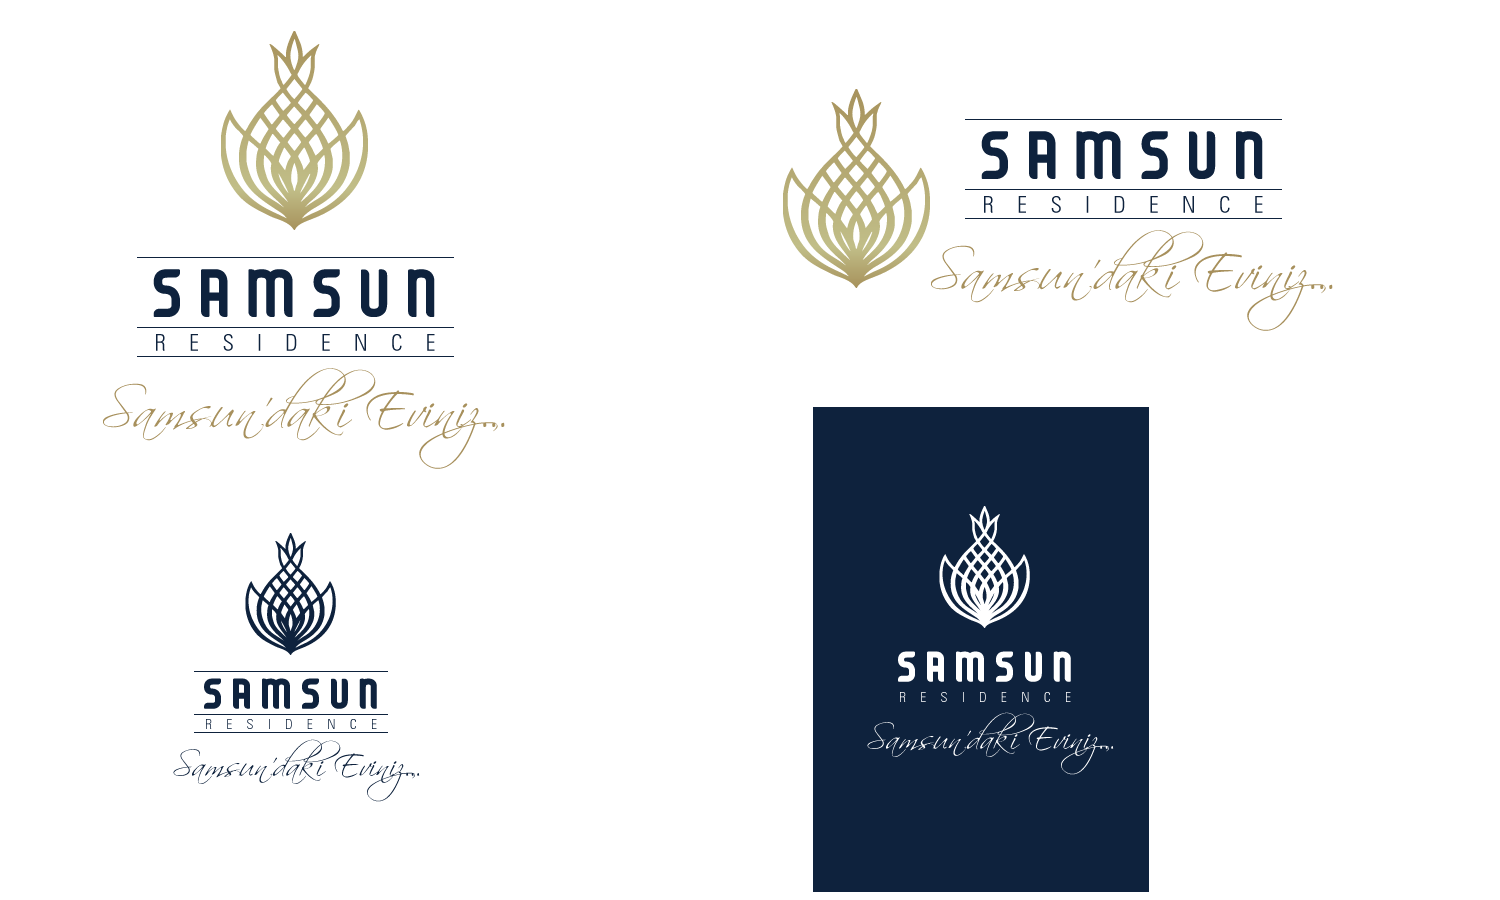 Residence Logo - Samsun Residence Logo Design | Property ID | Home decor, Logos ...